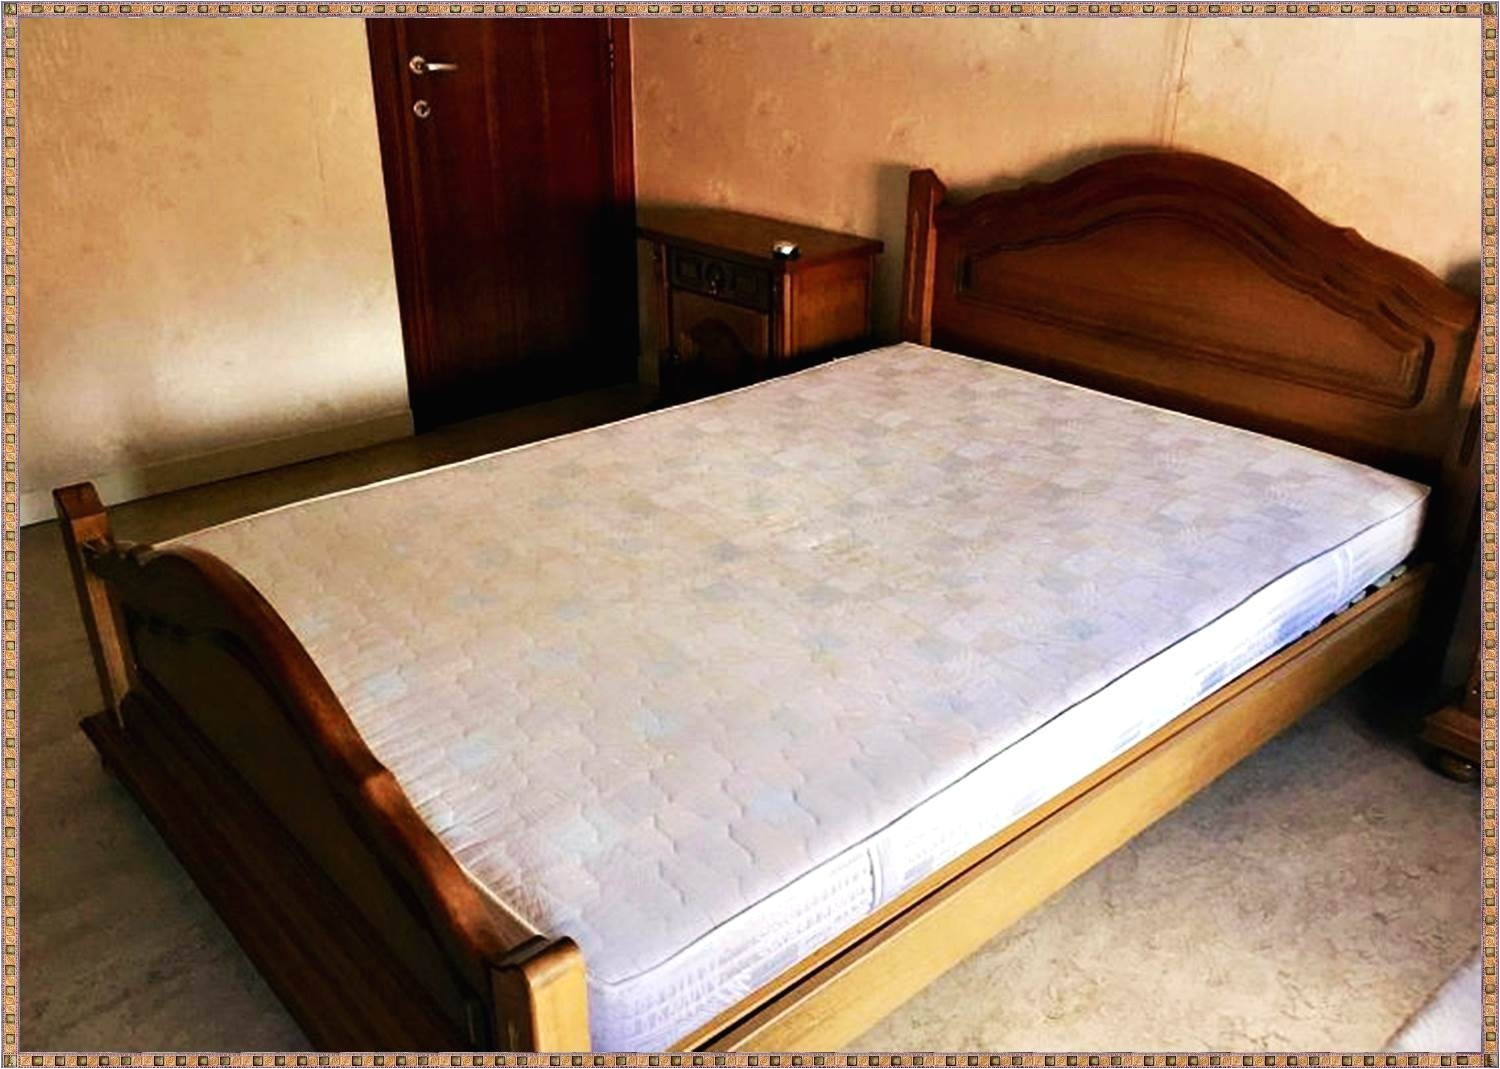 ikea crib mattress safety reviews